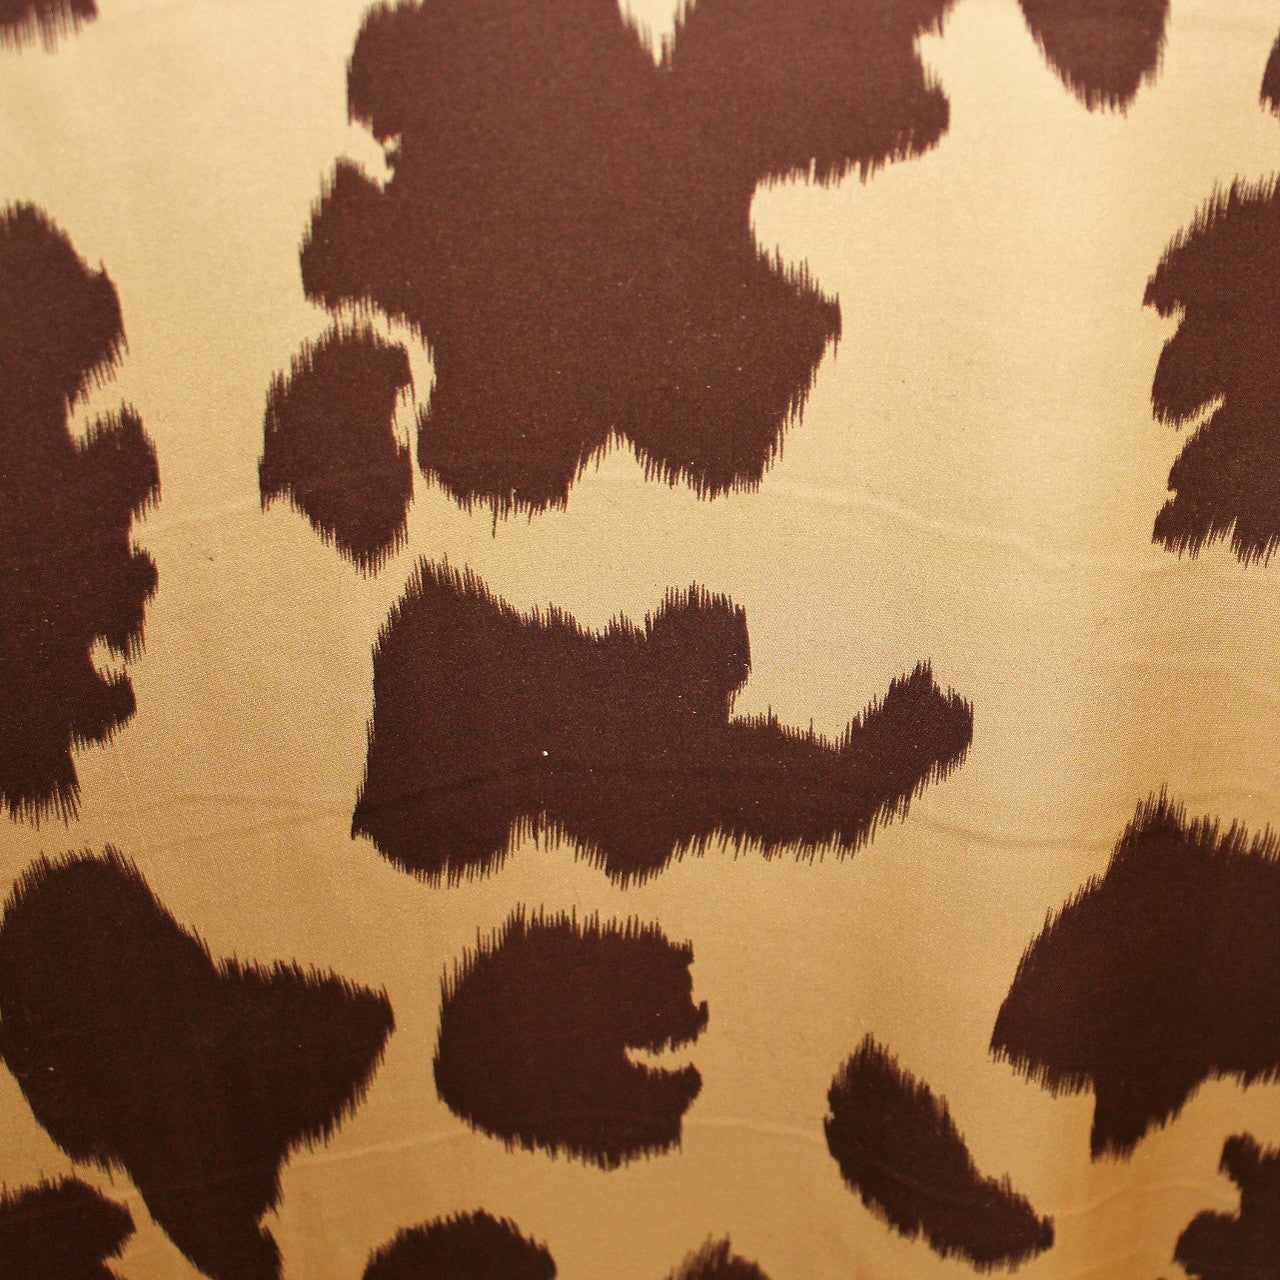 Brown cow print